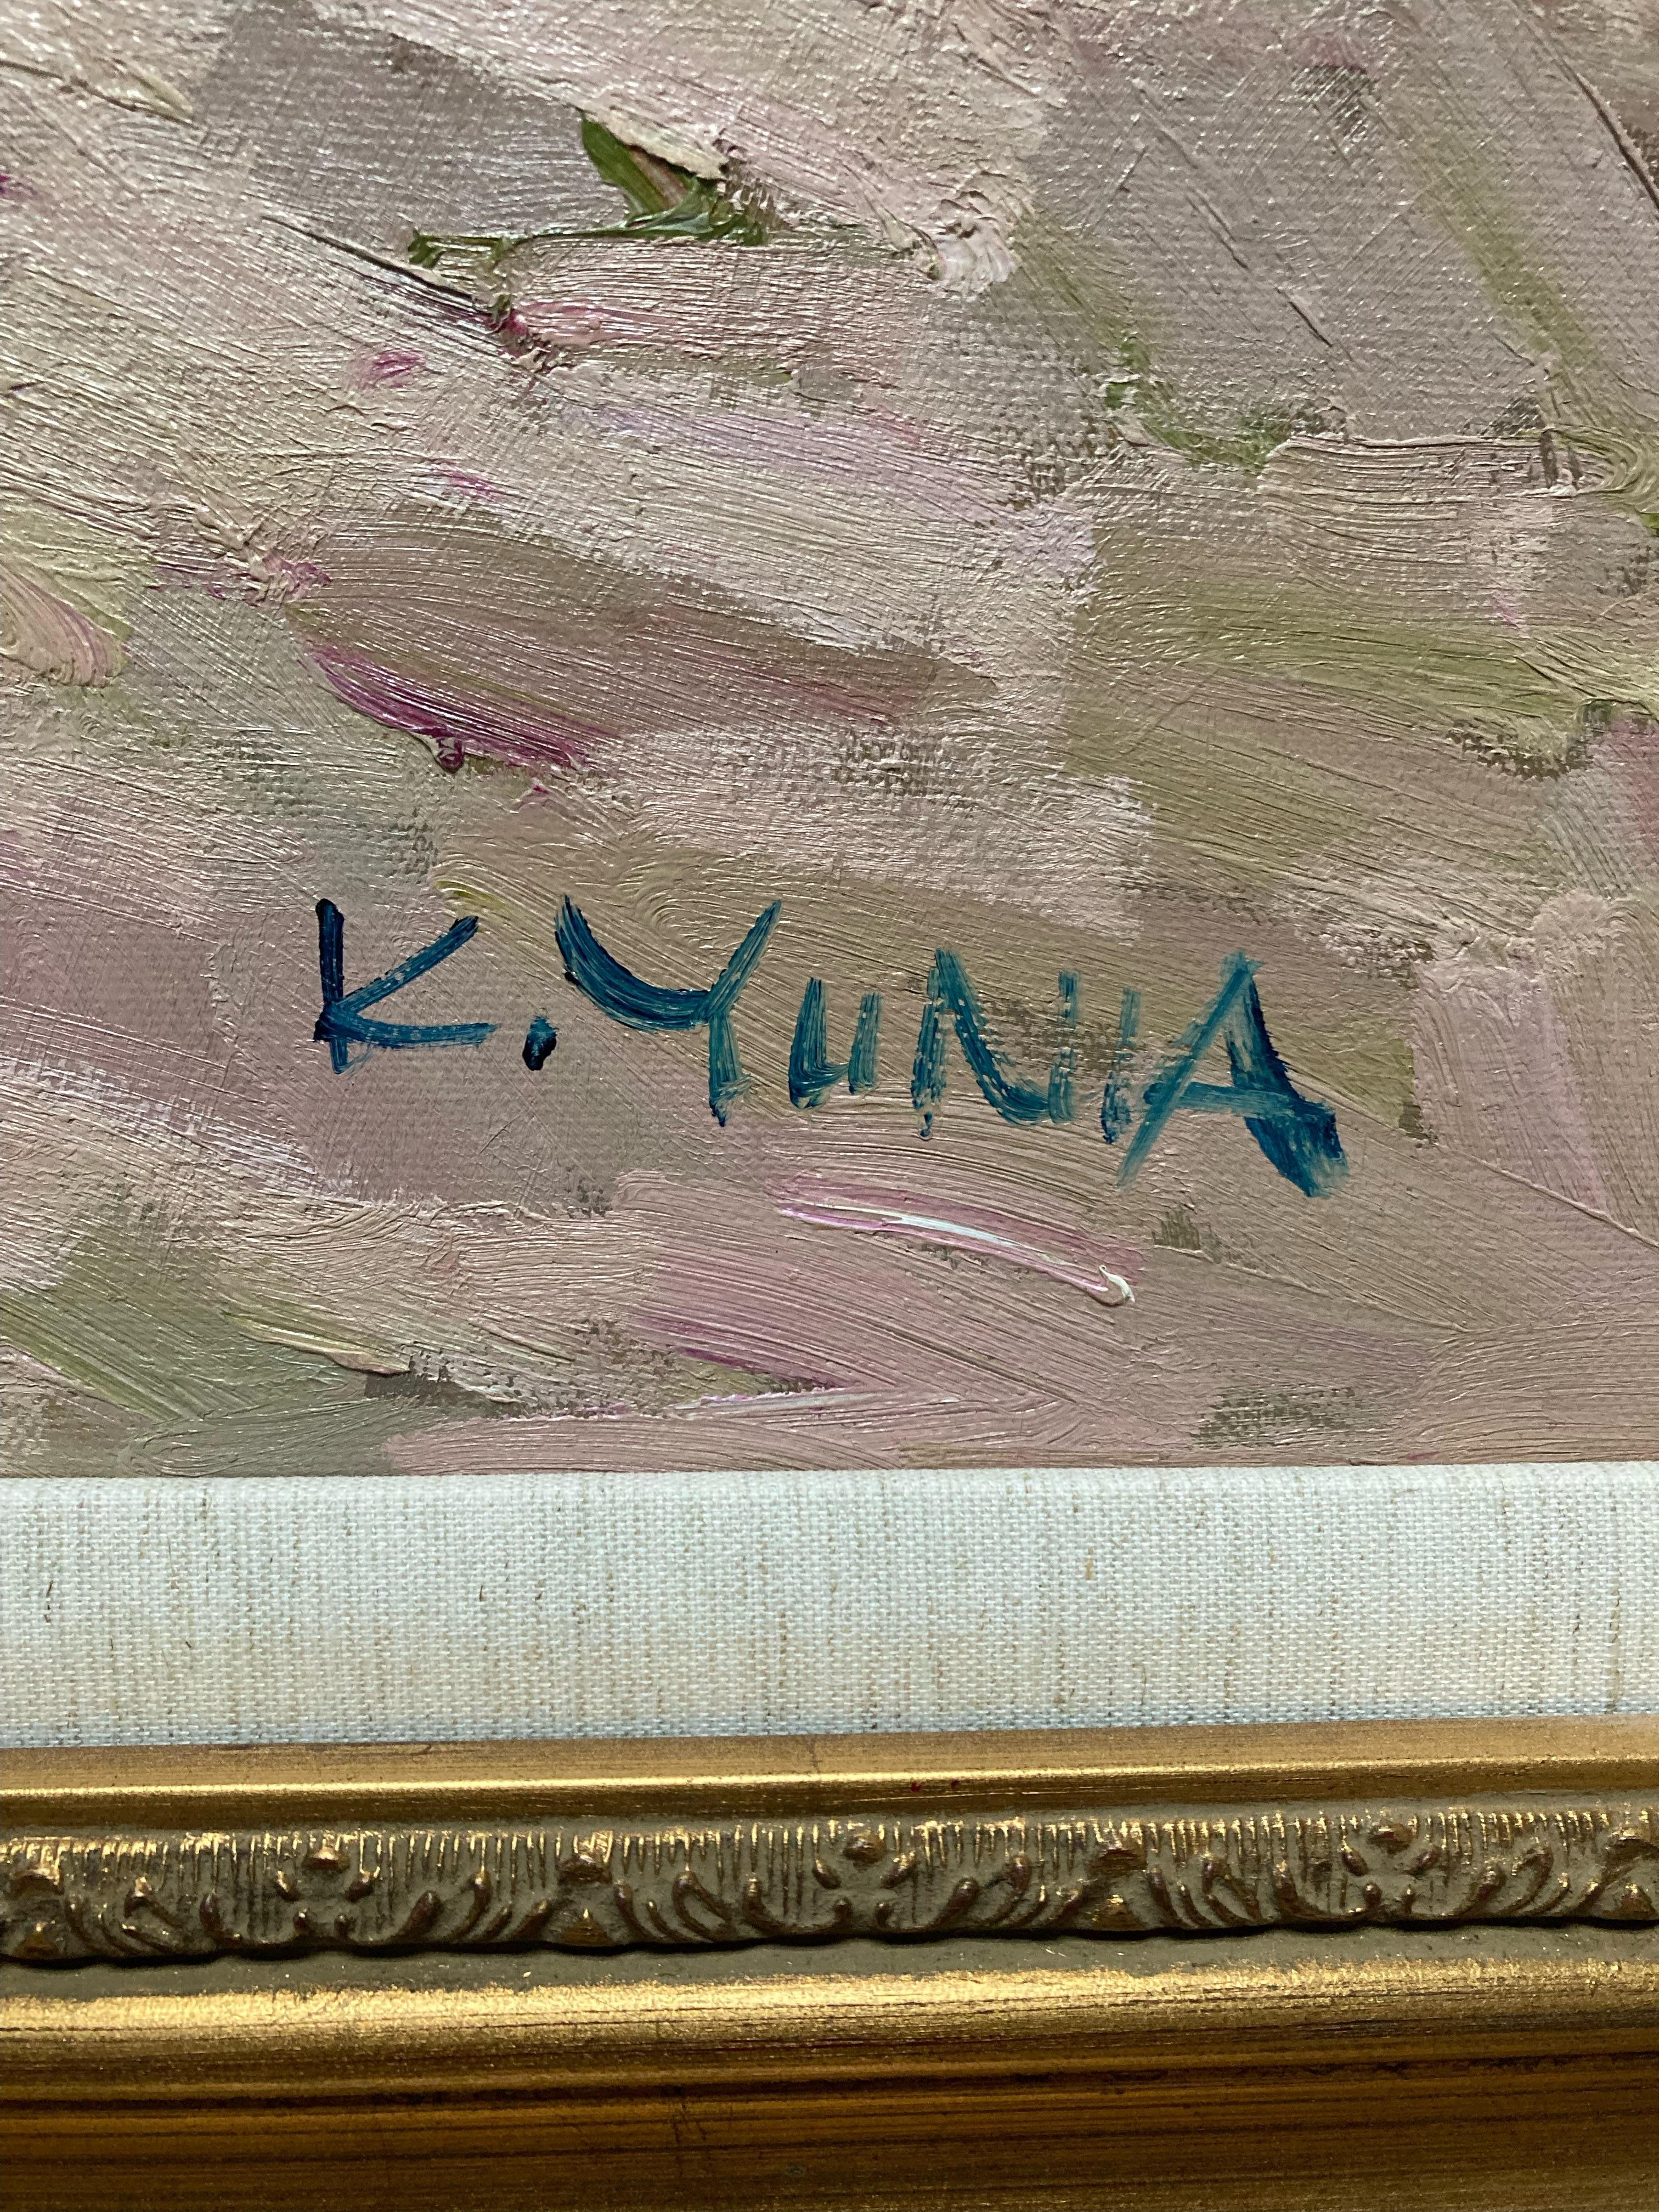 k yunia artist